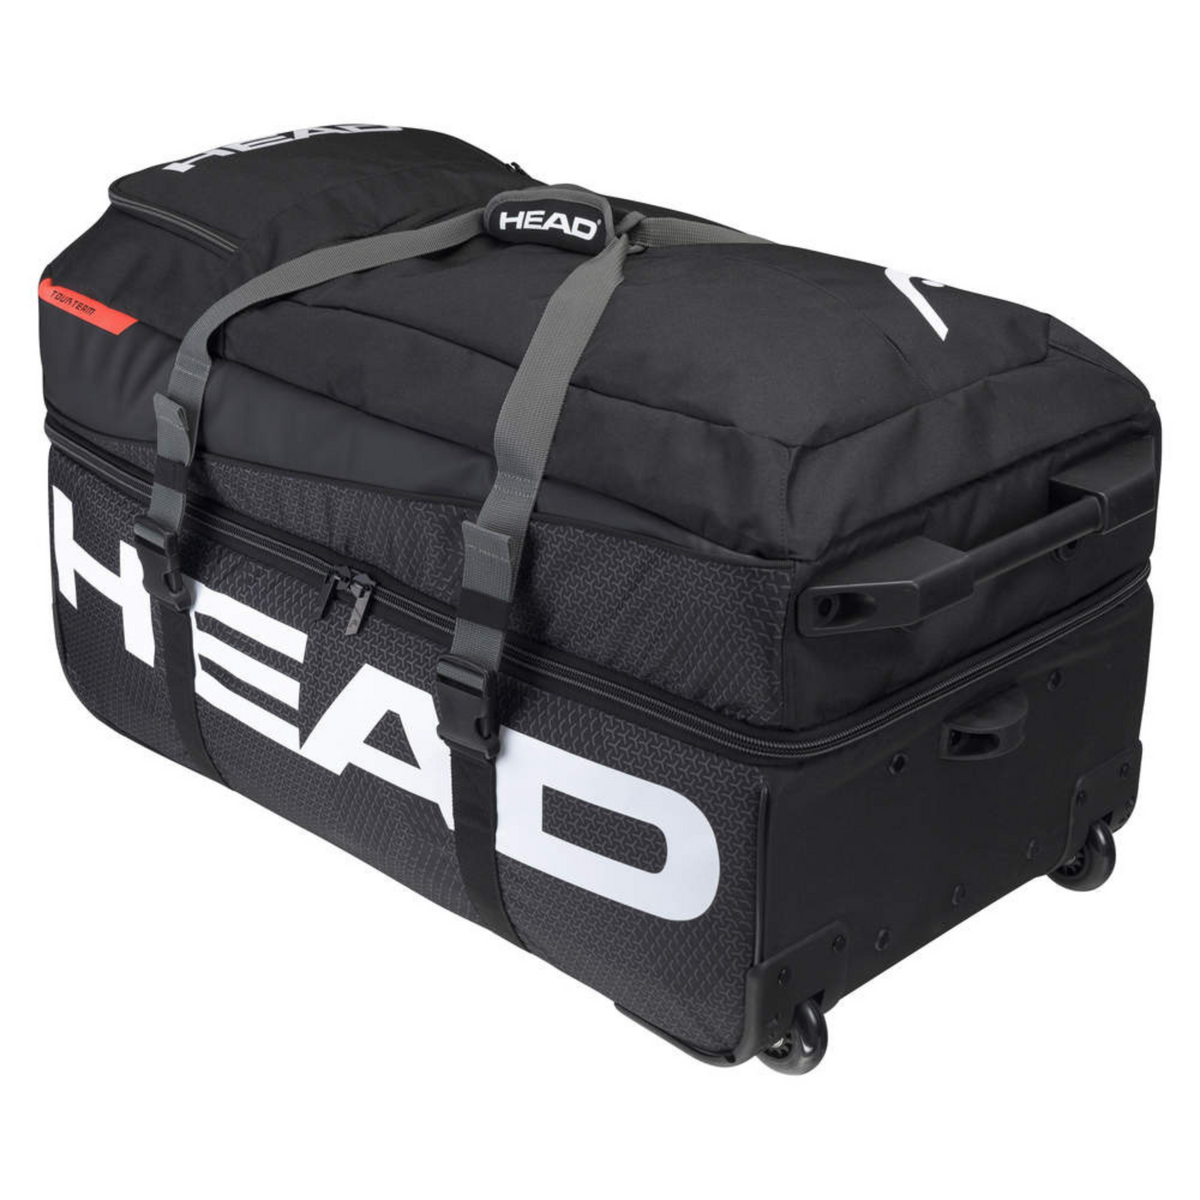 Tour Team Travel bag Tennis Luggage for athletes